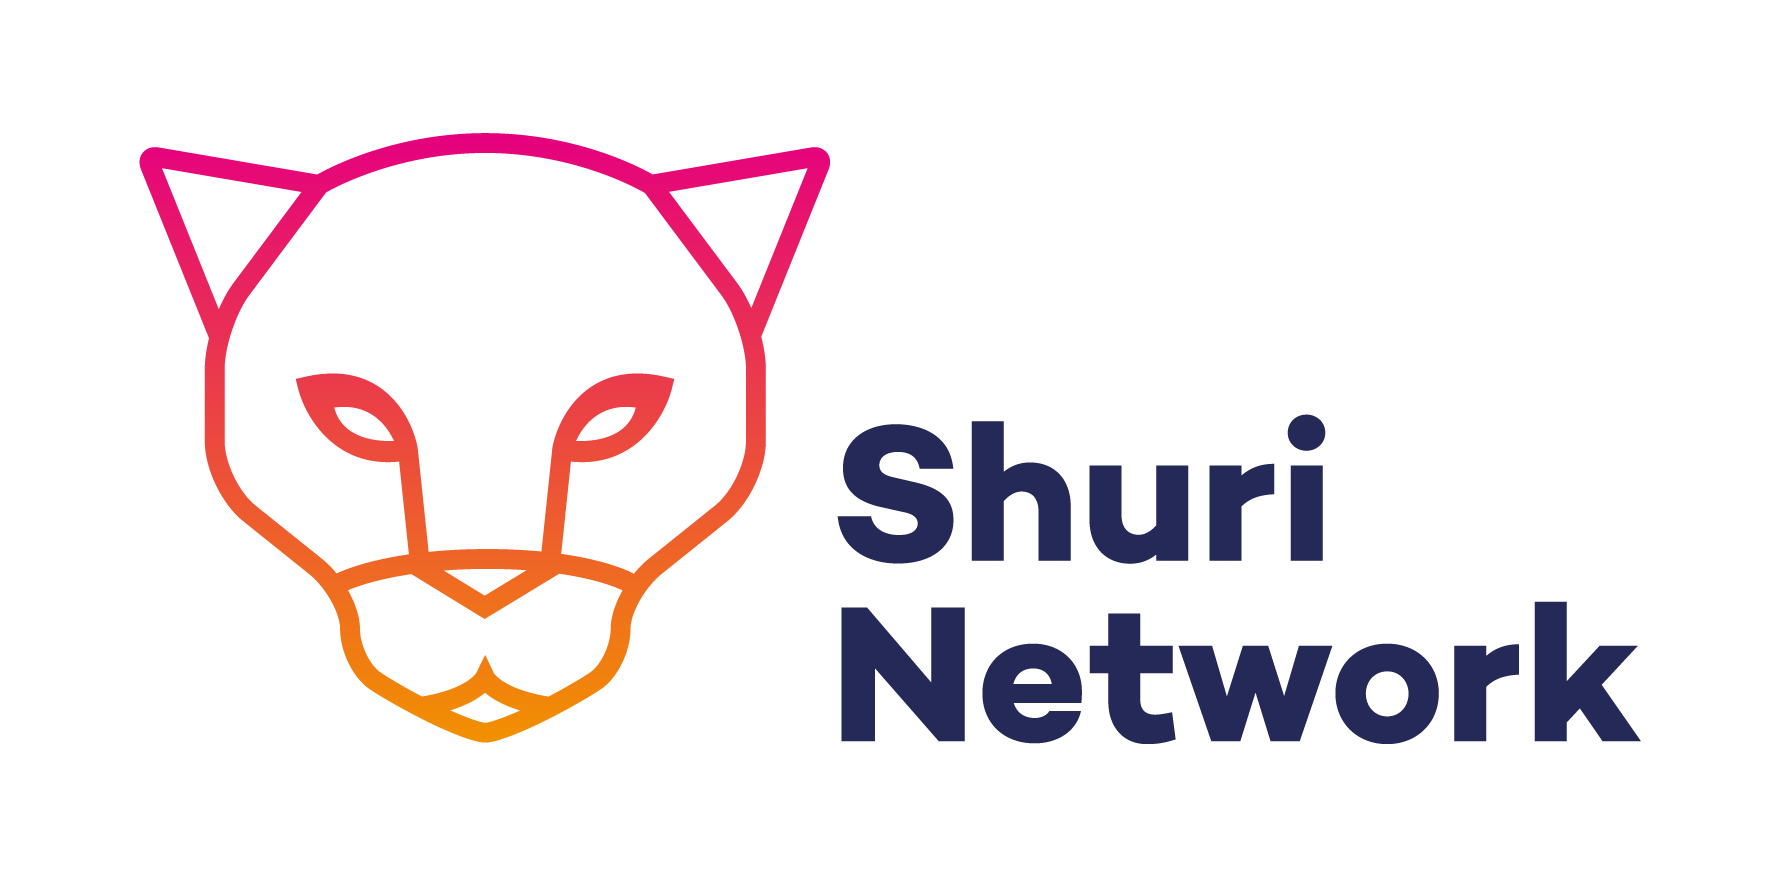 The Shuri Network logo